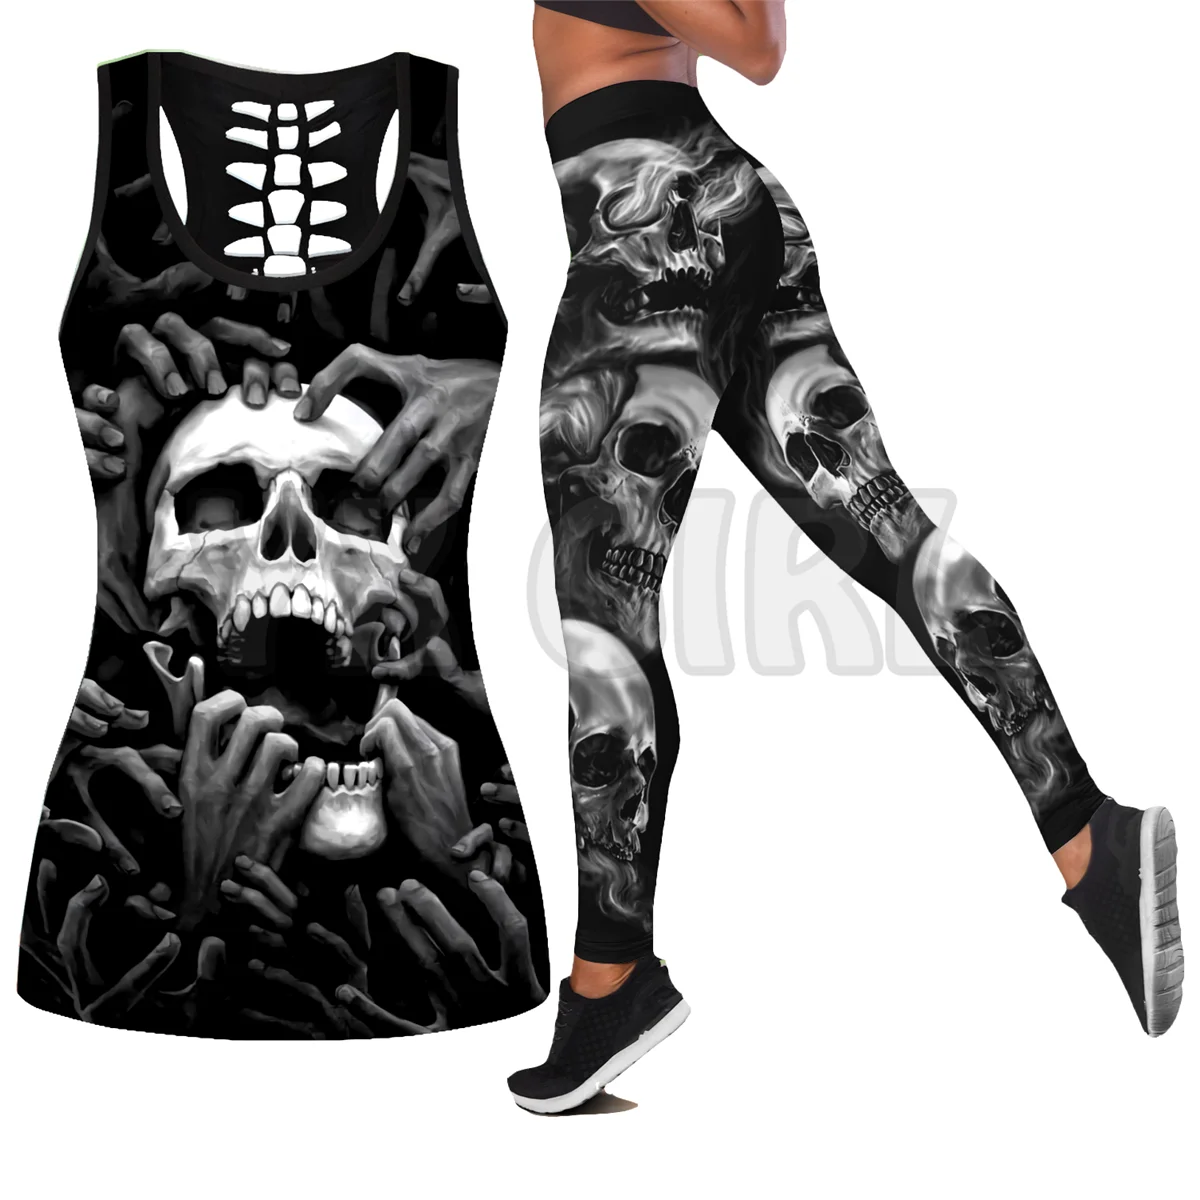 Skull  3D Printed Tank Top+Legging Combo Outfit Yoga Fitness Legging Women